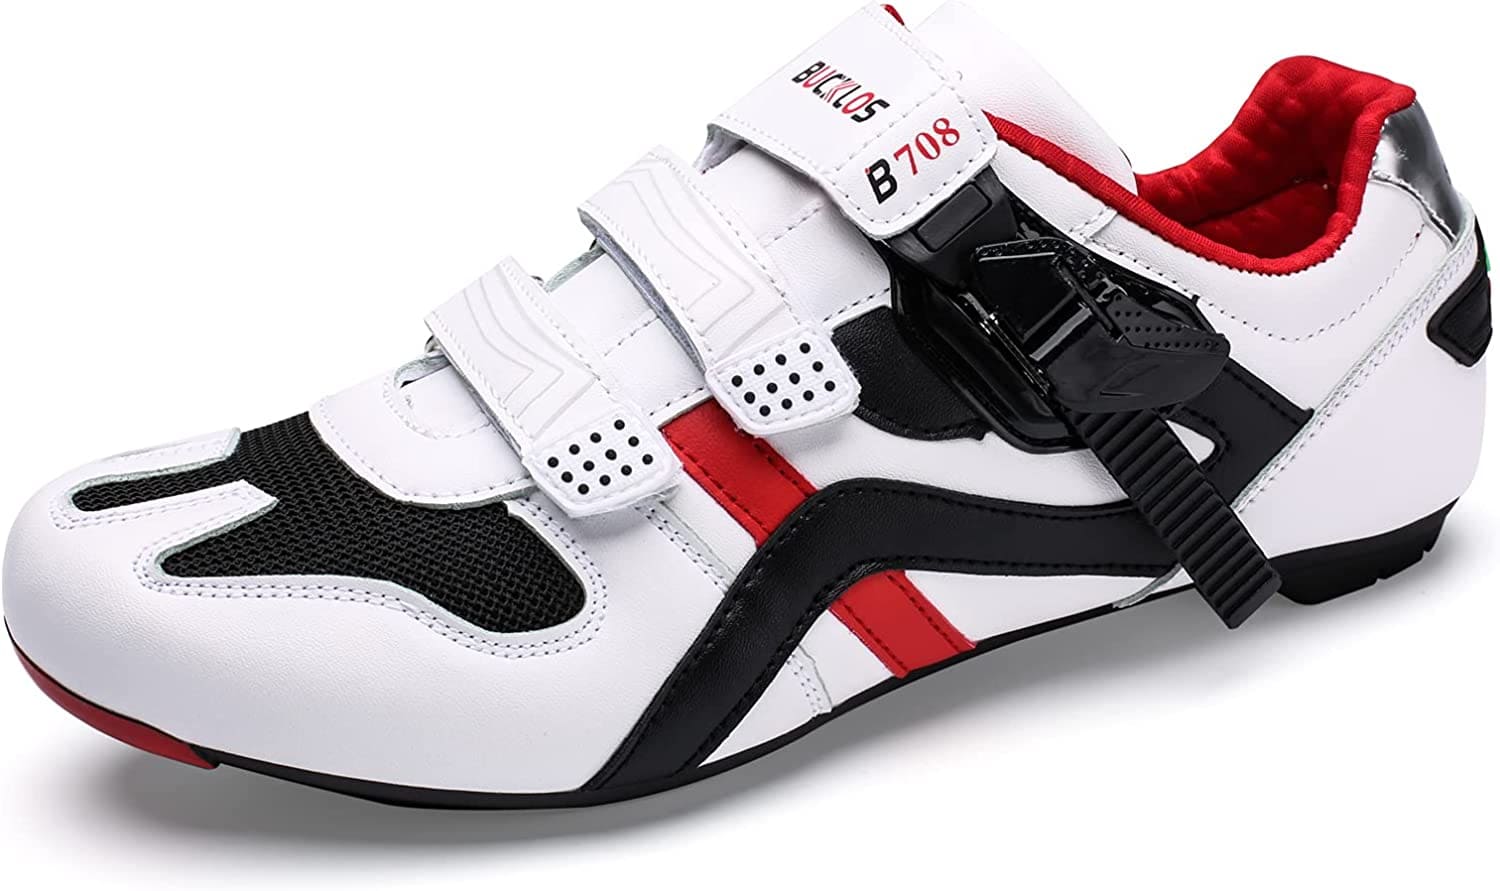 B708 MTB Cycling Shoes US